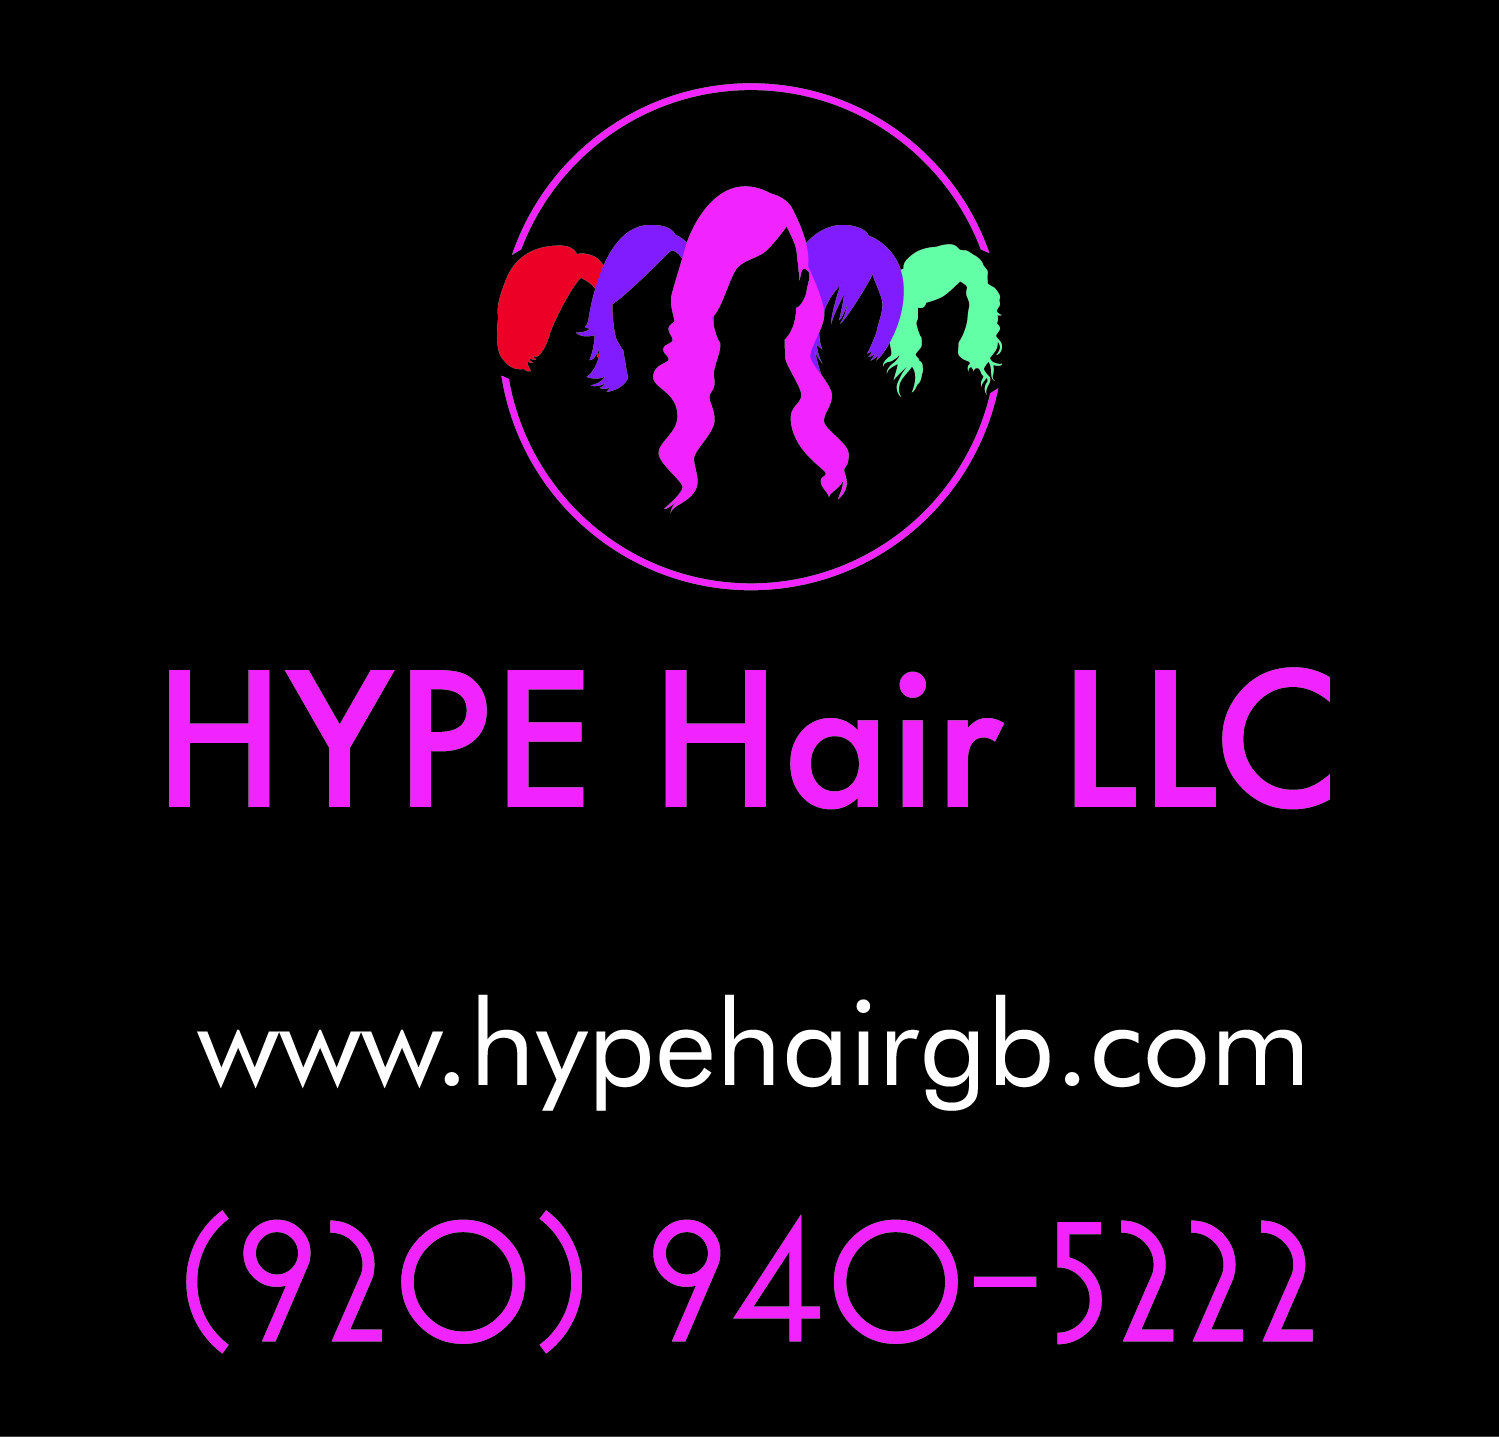 Hype Hair LLC